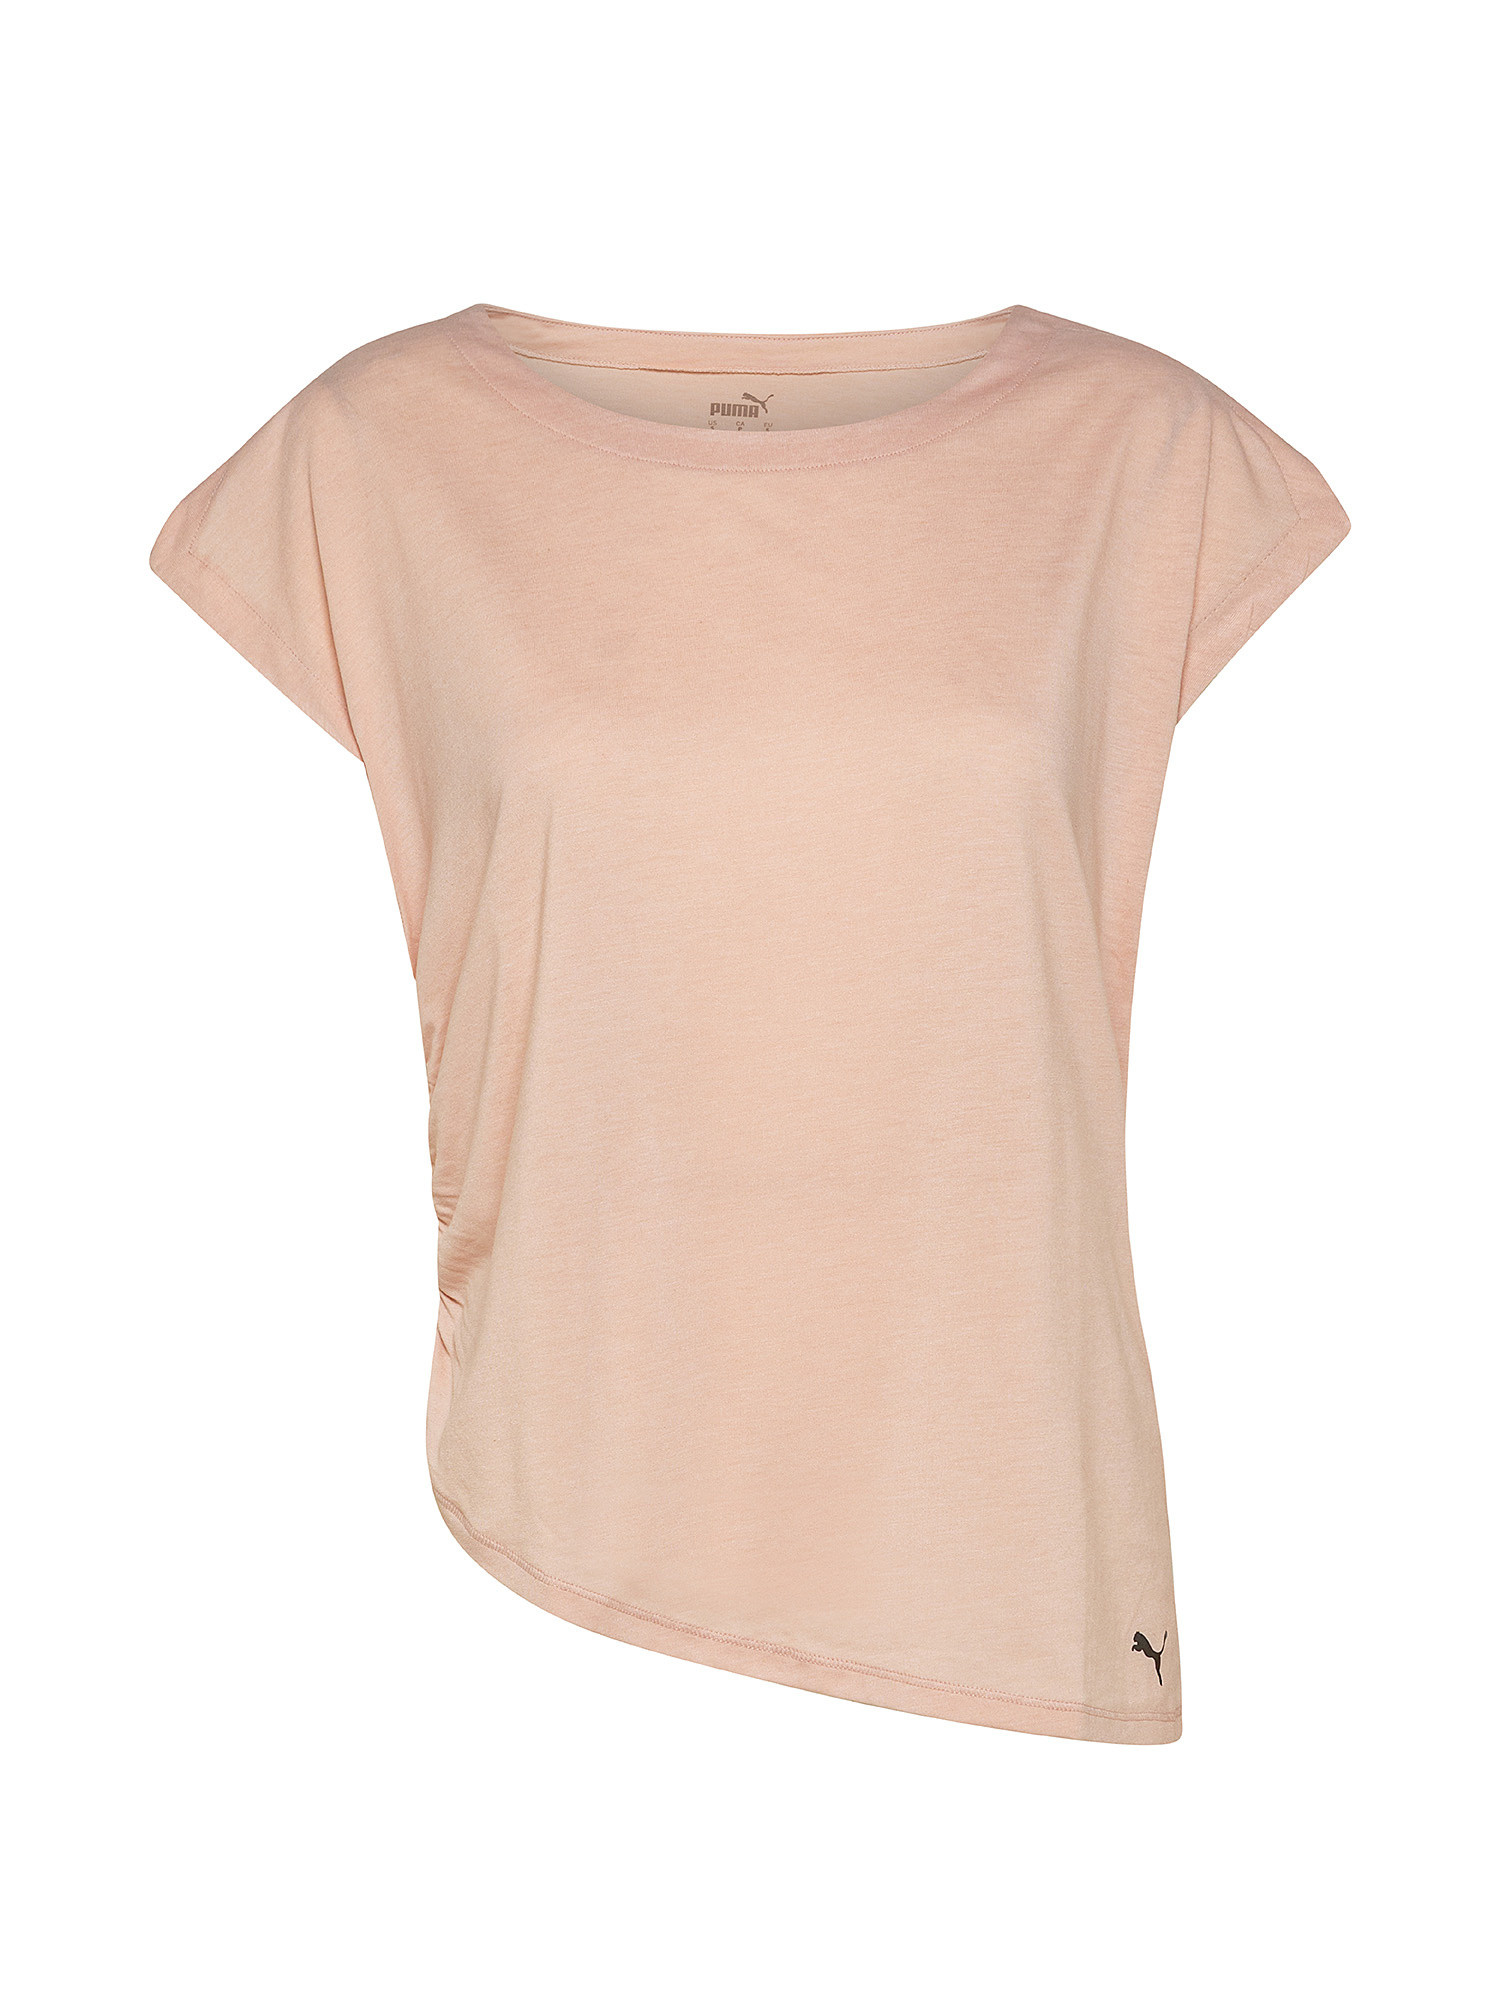 Asymmetrical T-shirt, Light Pink, large image number 0